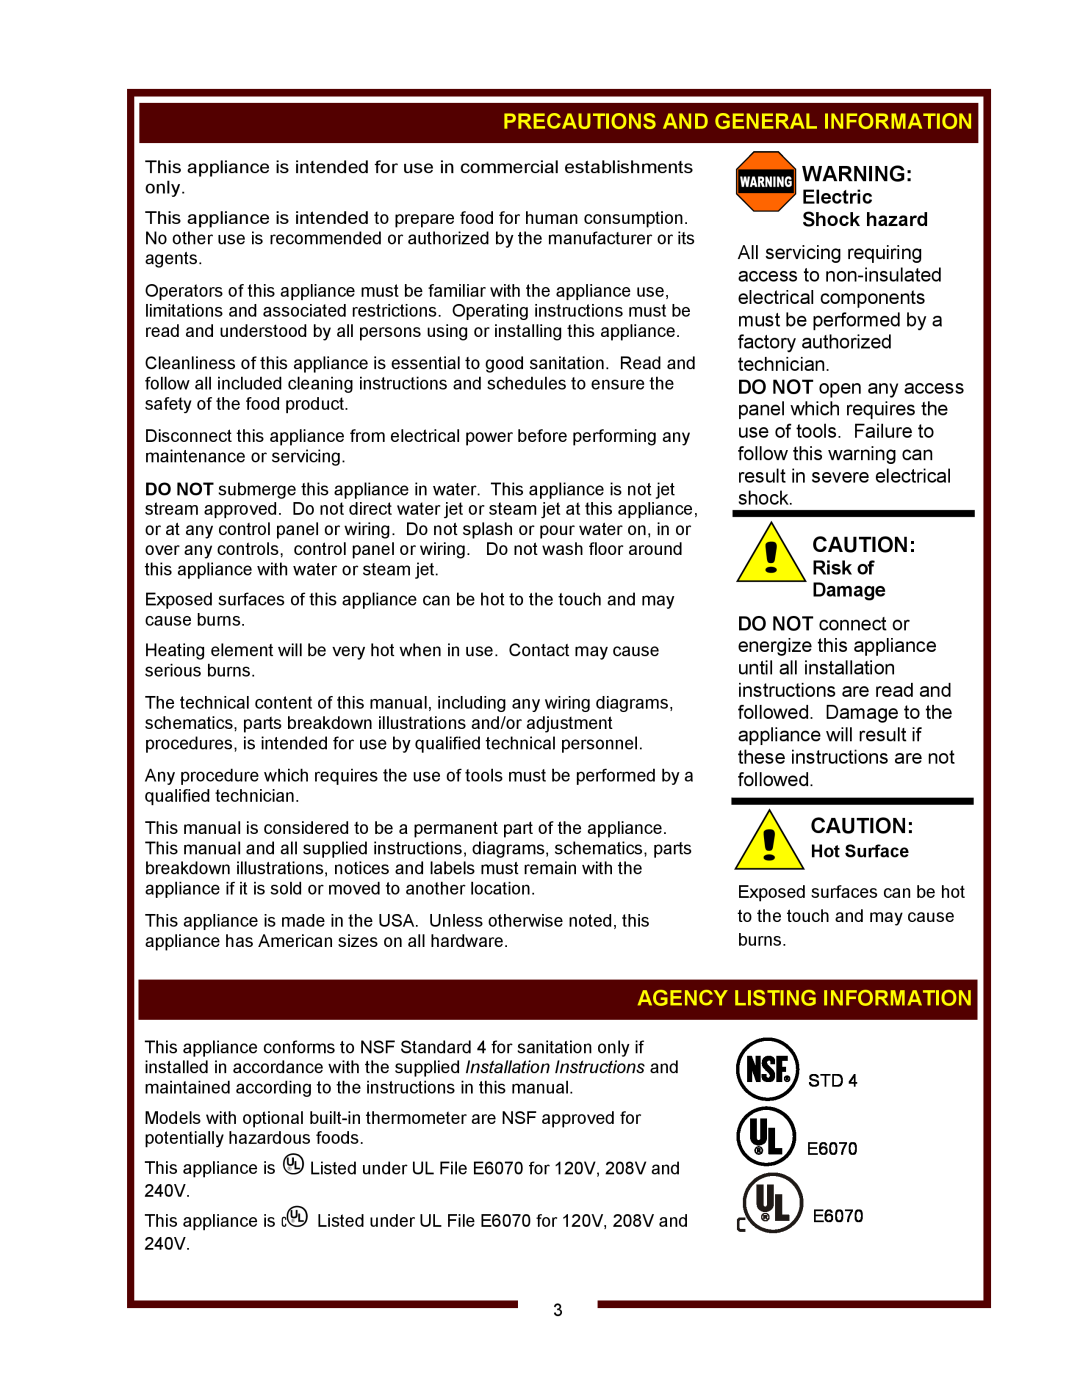 Wells RWN-16 thru RWN-36, RWN-2 Precautions And General Information, Agency Listing Information, Electric Shock hazard 